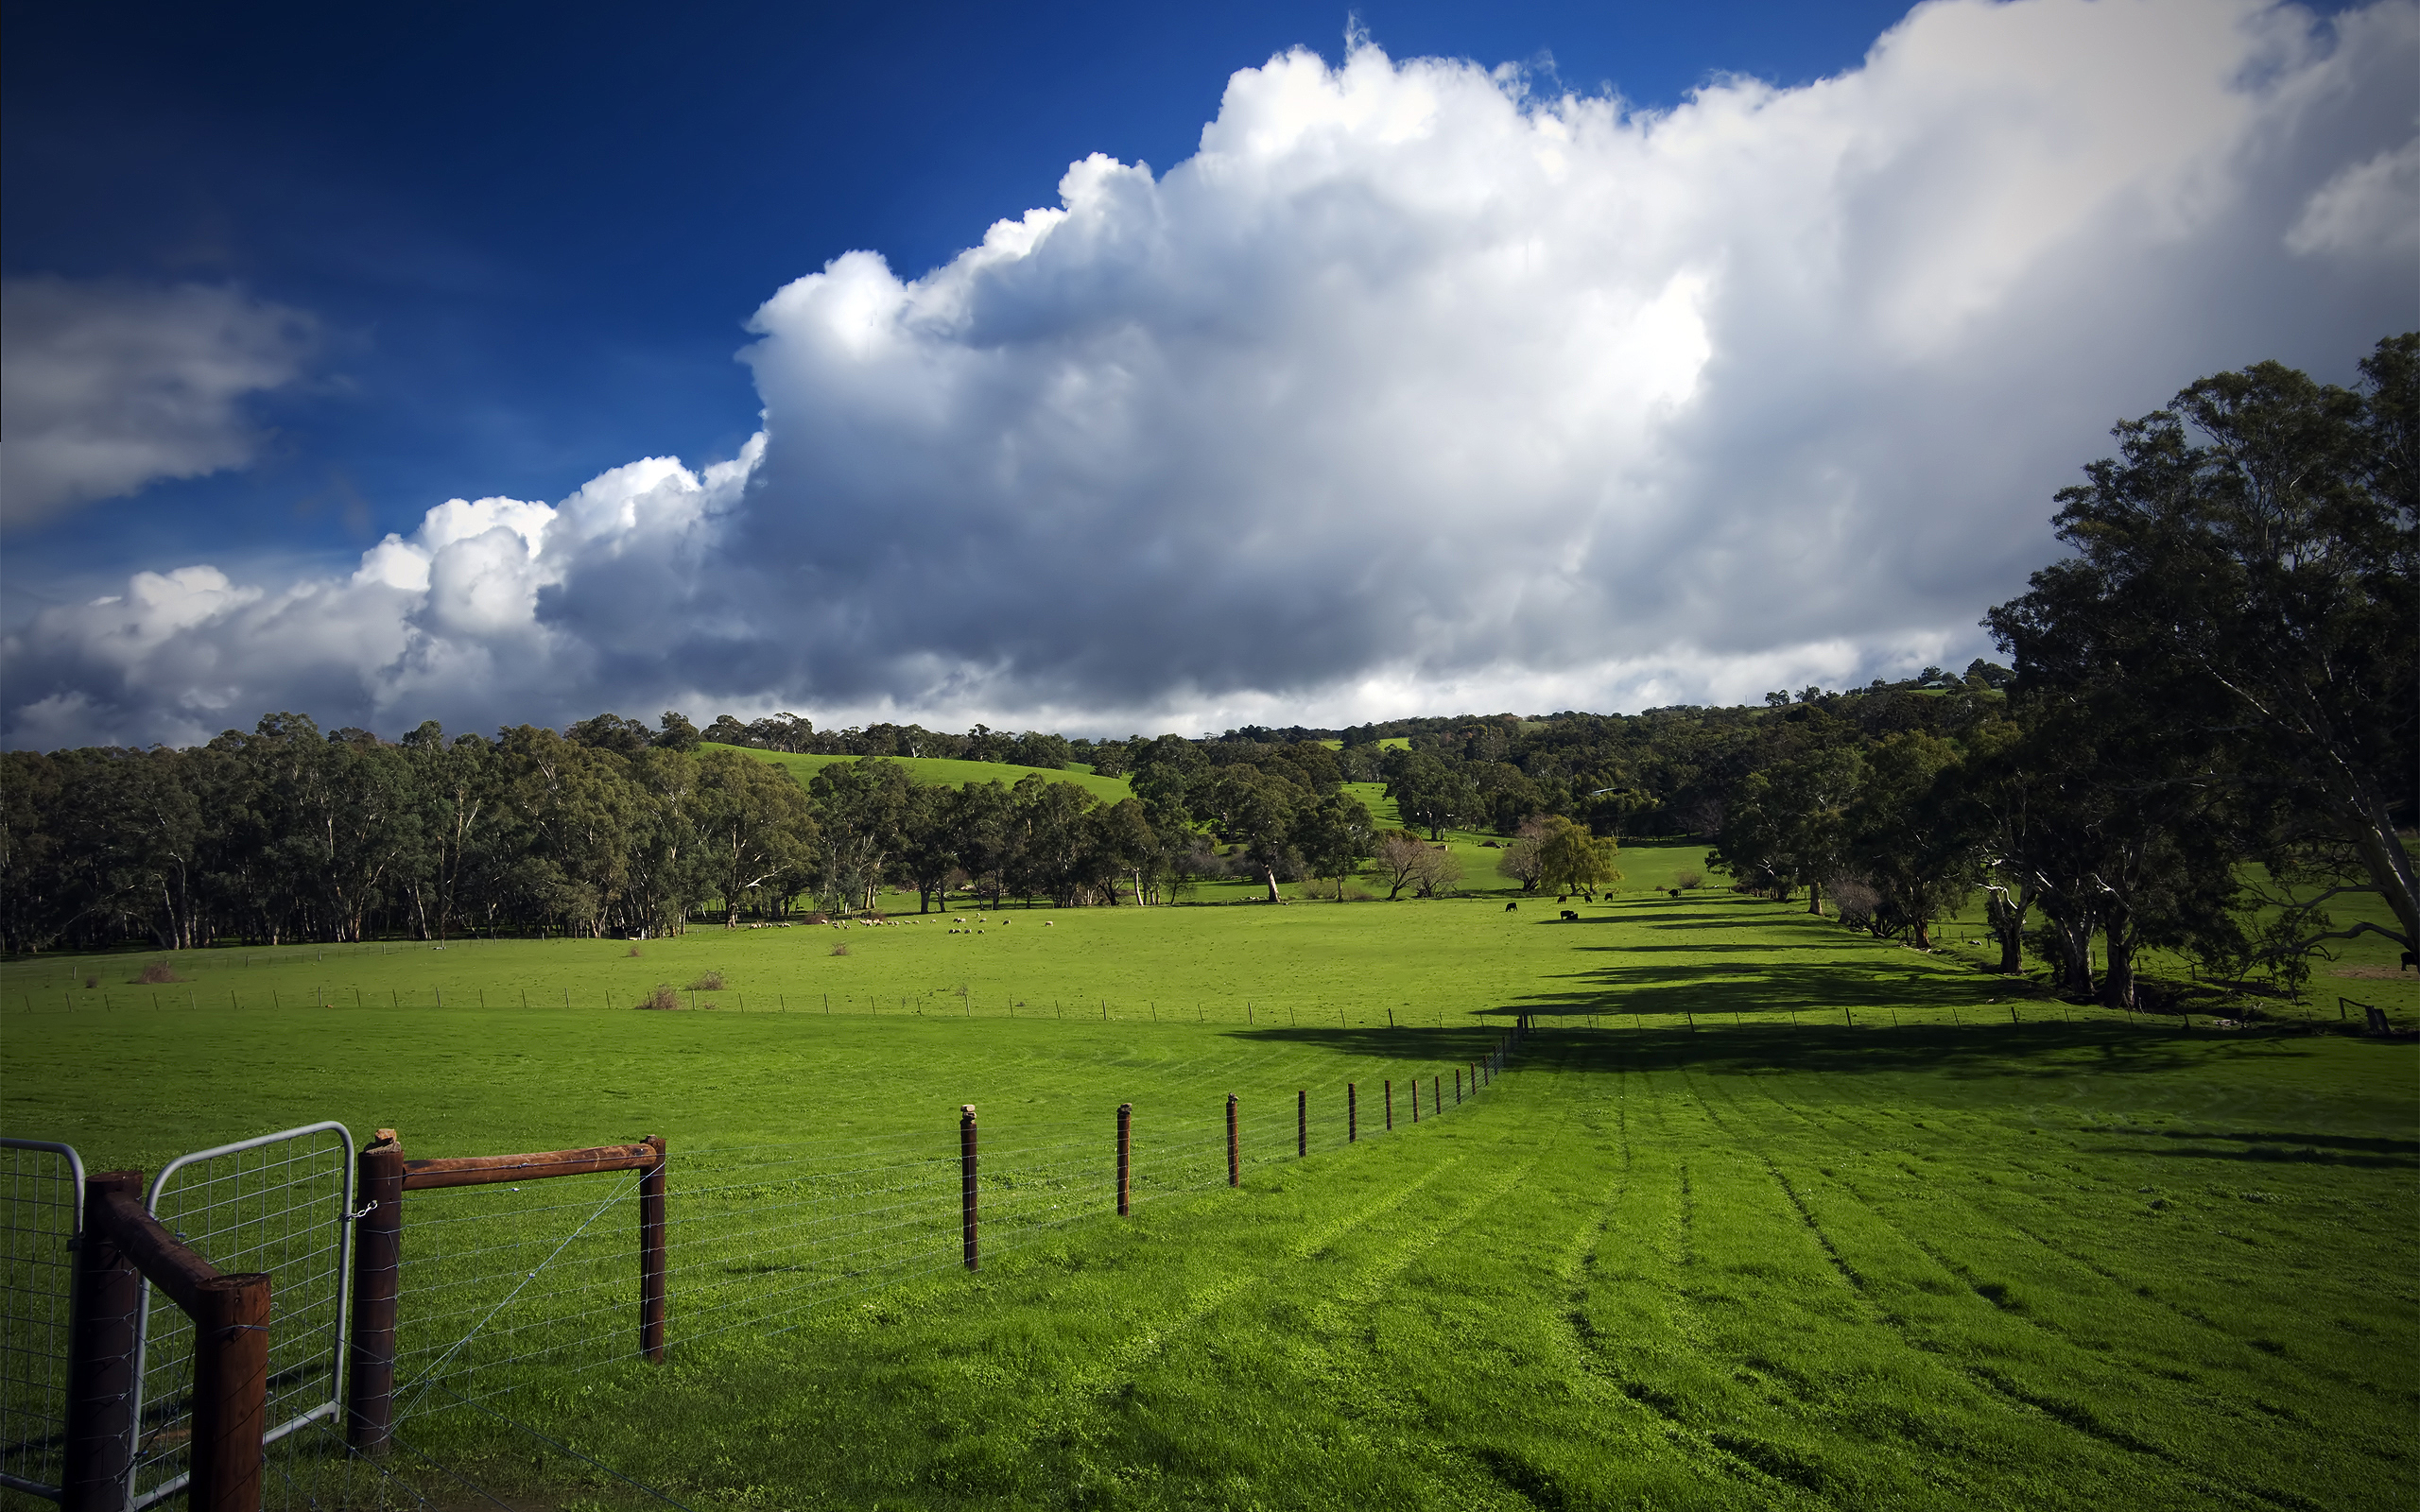 australia, earth, field, cattle, cloud, fence, hill, sheep, sky